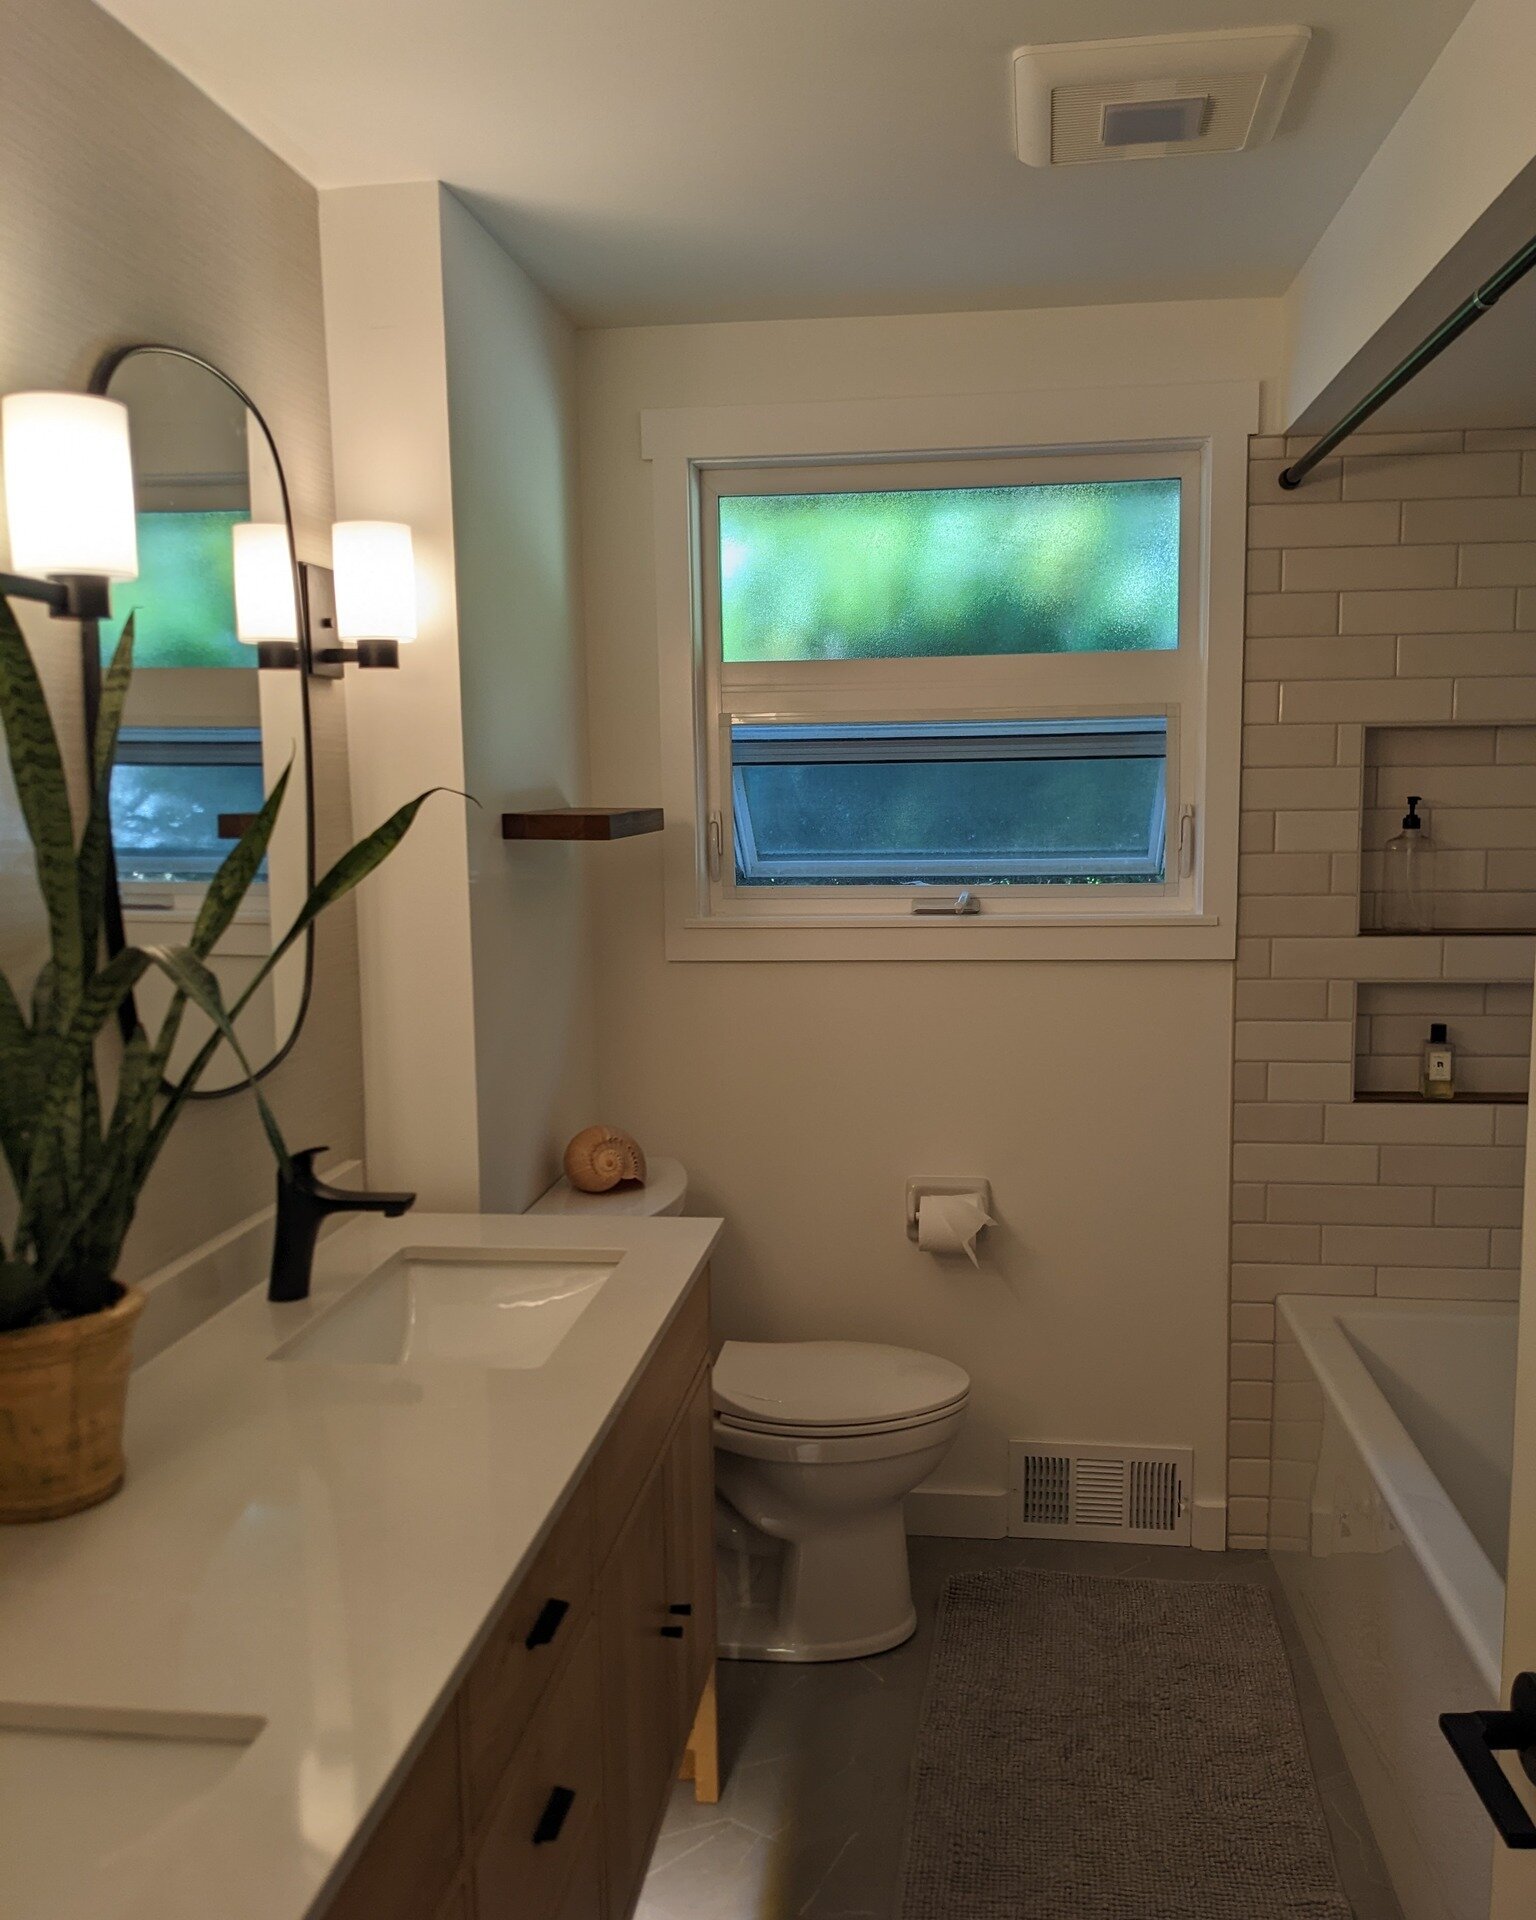 One of my favorite projects. Turned out cozy bathroom!

 #grandresidence #remodeling #bathroom #bathroomideas #edmondswa #bathroomdesign #edmondsremodel #bathroomrenovation #bathroomremodel #bathrooms #bathroomdecor #seattle #tile #tiles #tilework #t